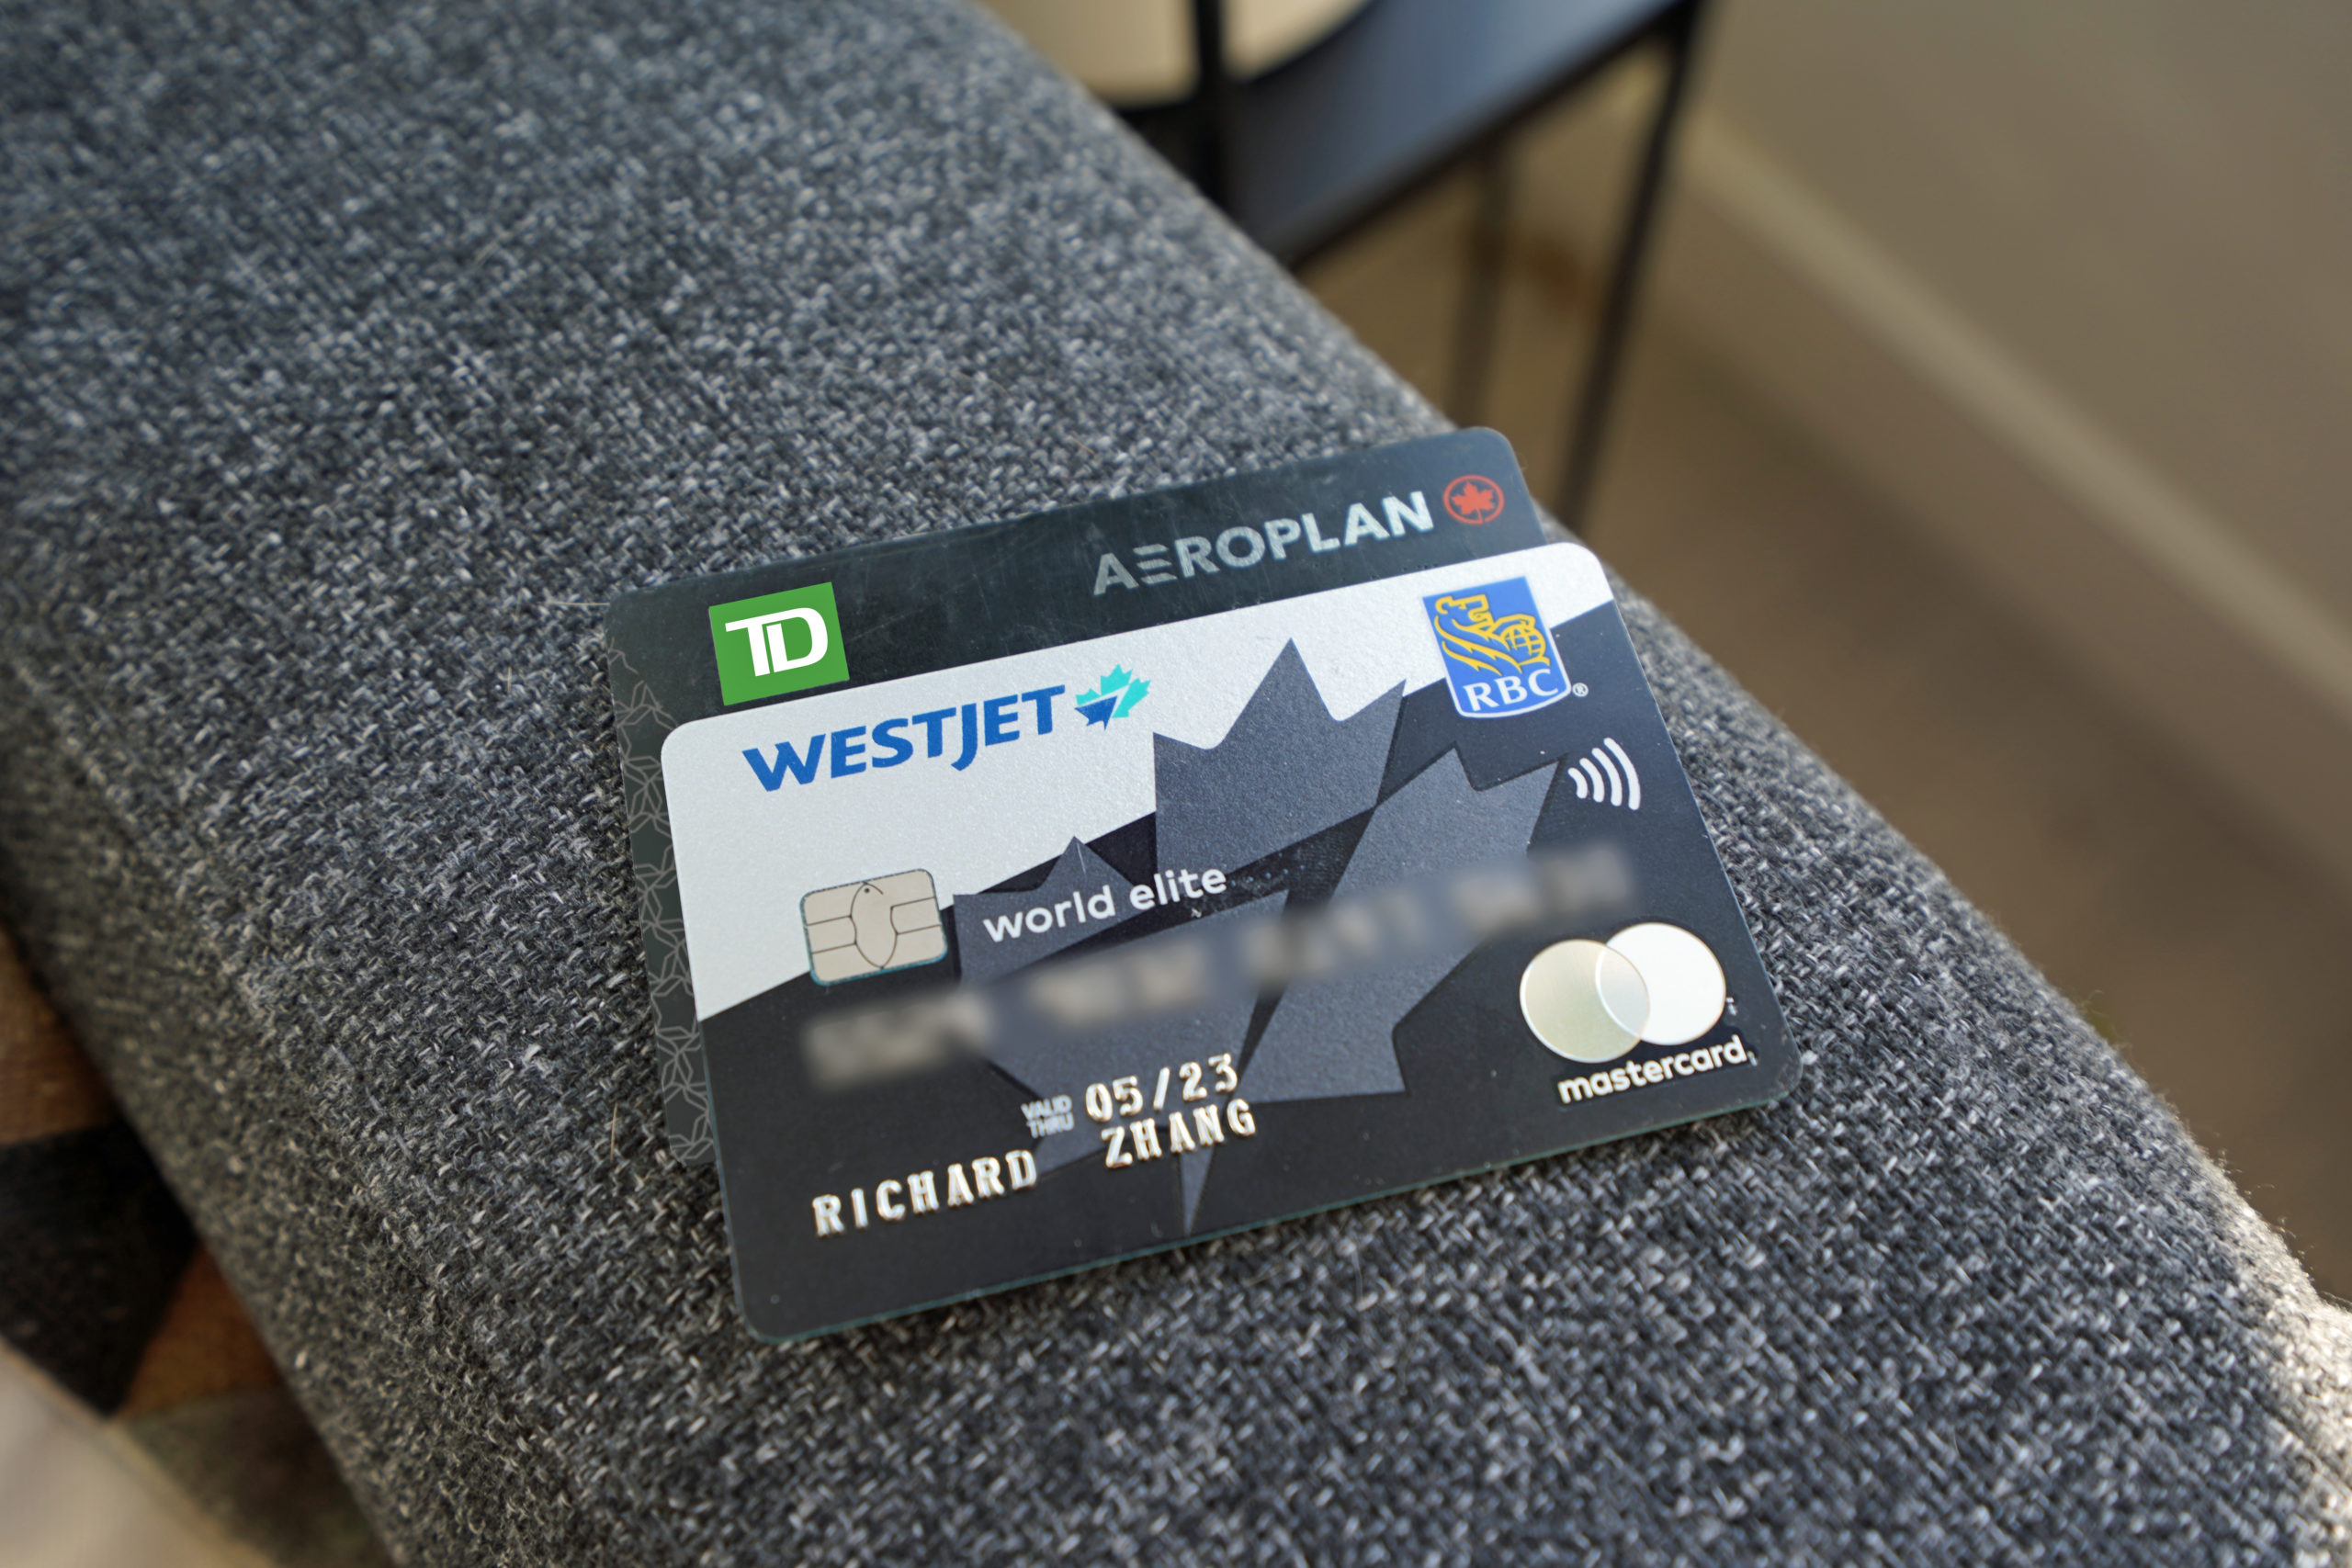 westjet travel mastercard